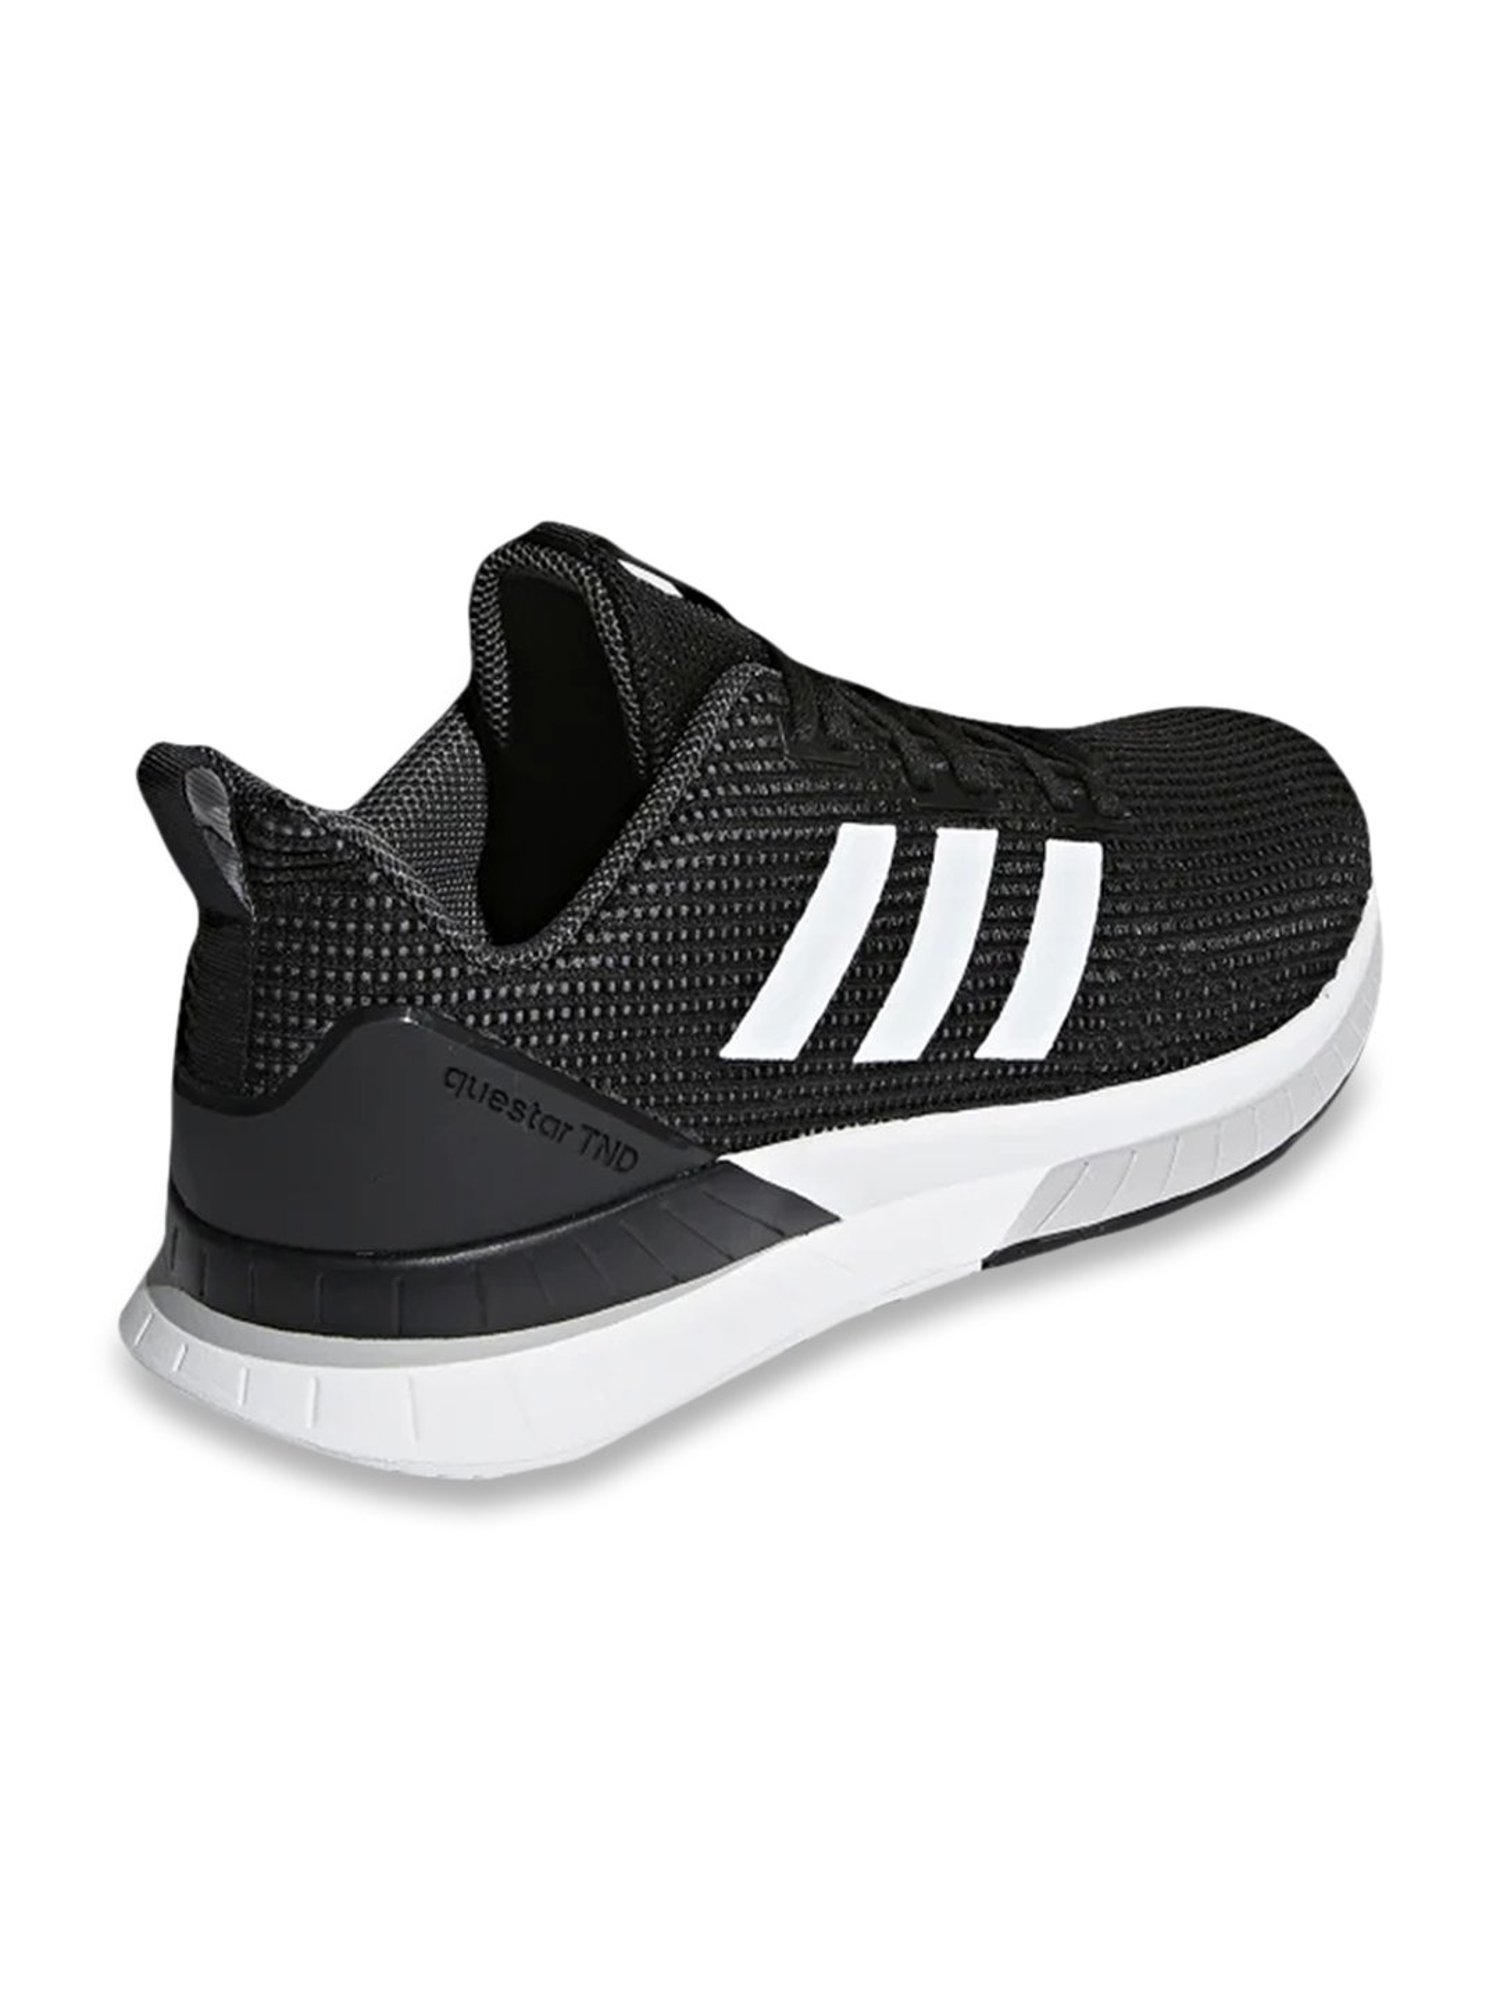 Adidas Questar TND Black Running Shoes 